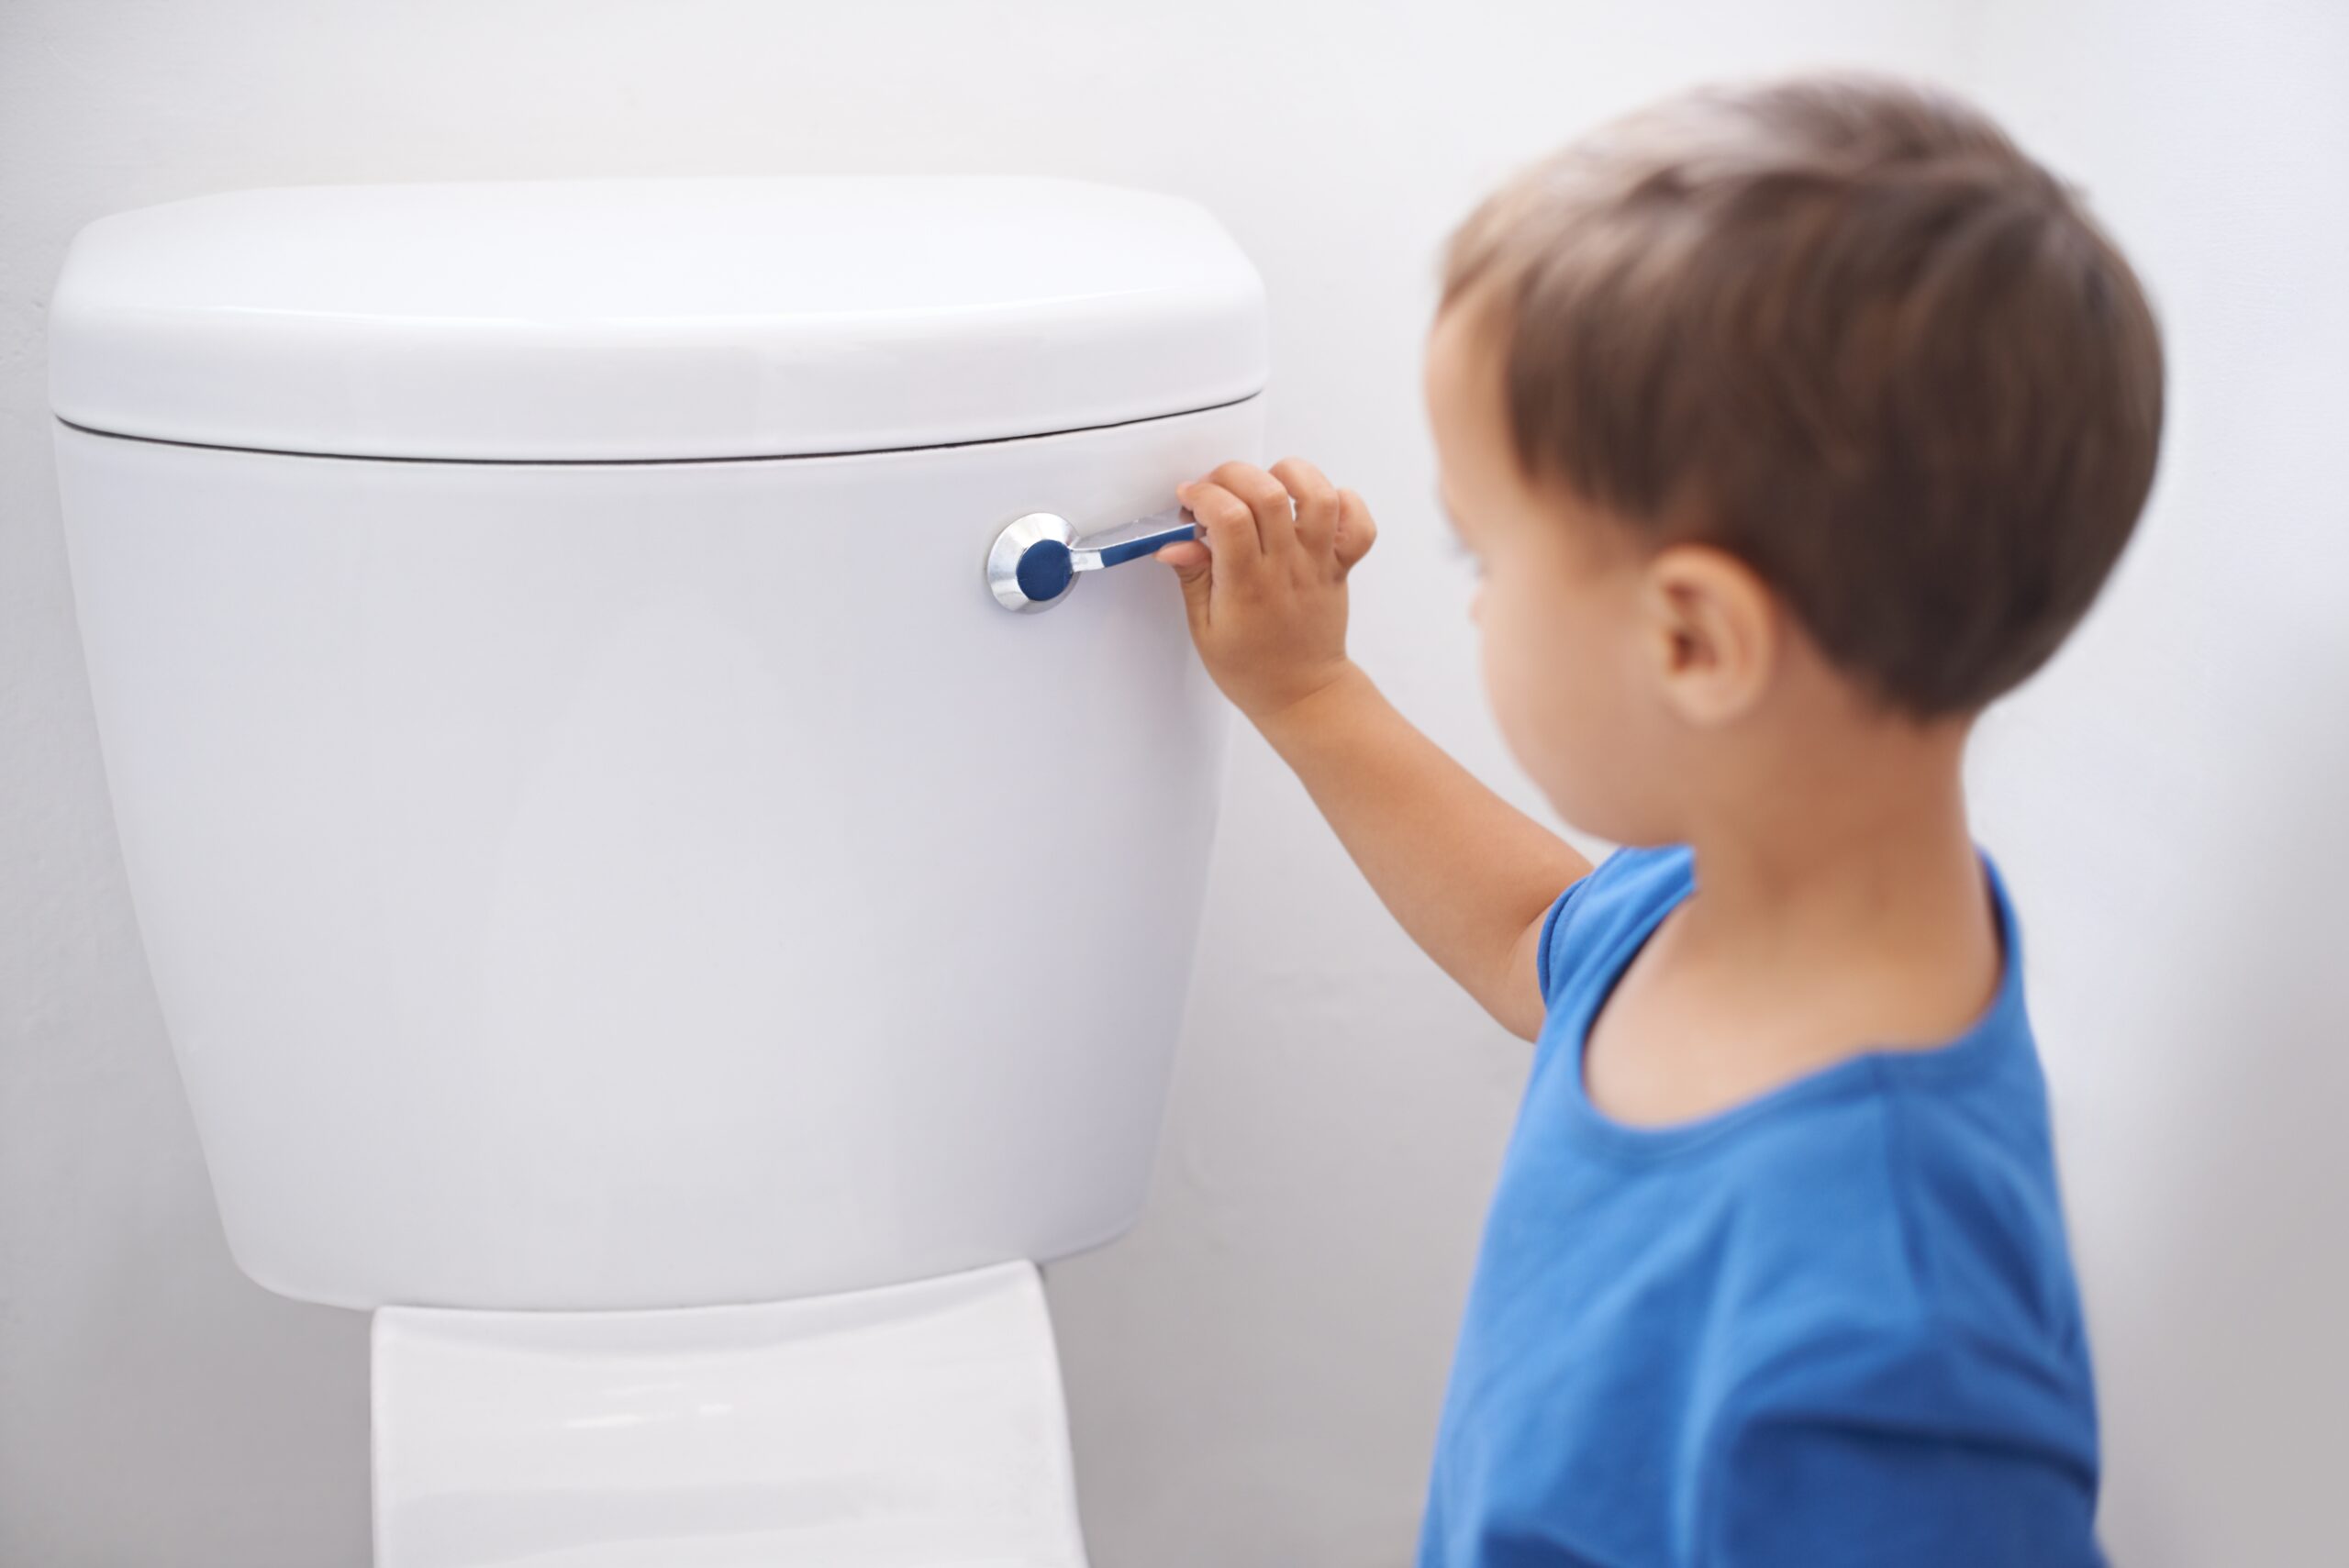 a child flushing a toilet